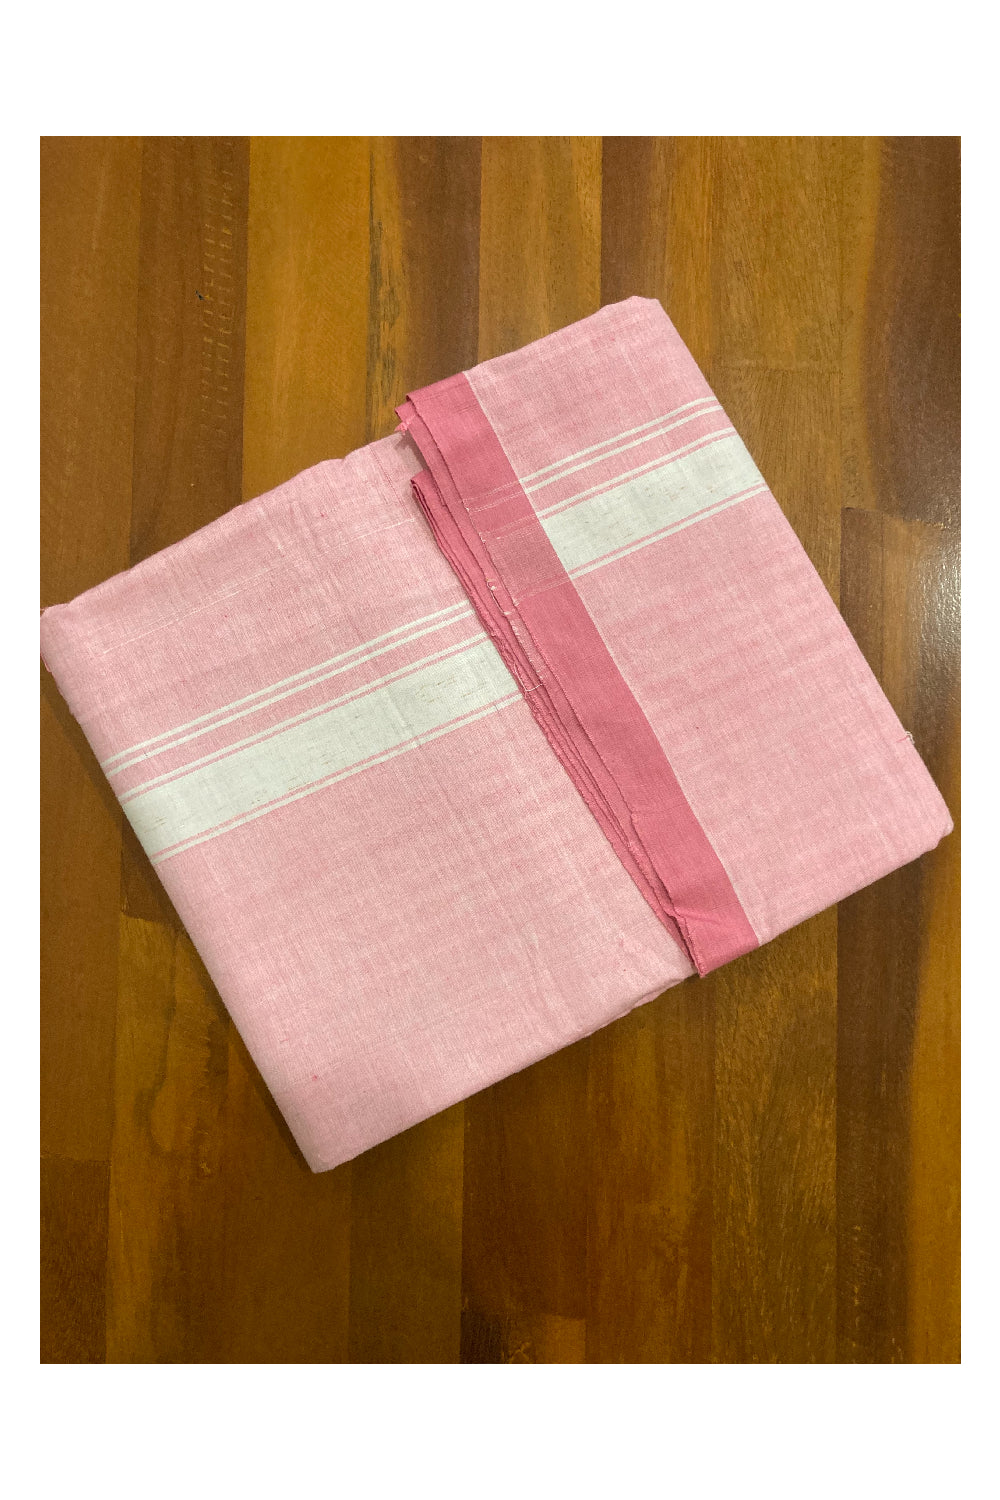 Southloom Premium Handloom Pink Solid Single Mundu (Lungi) with White Border